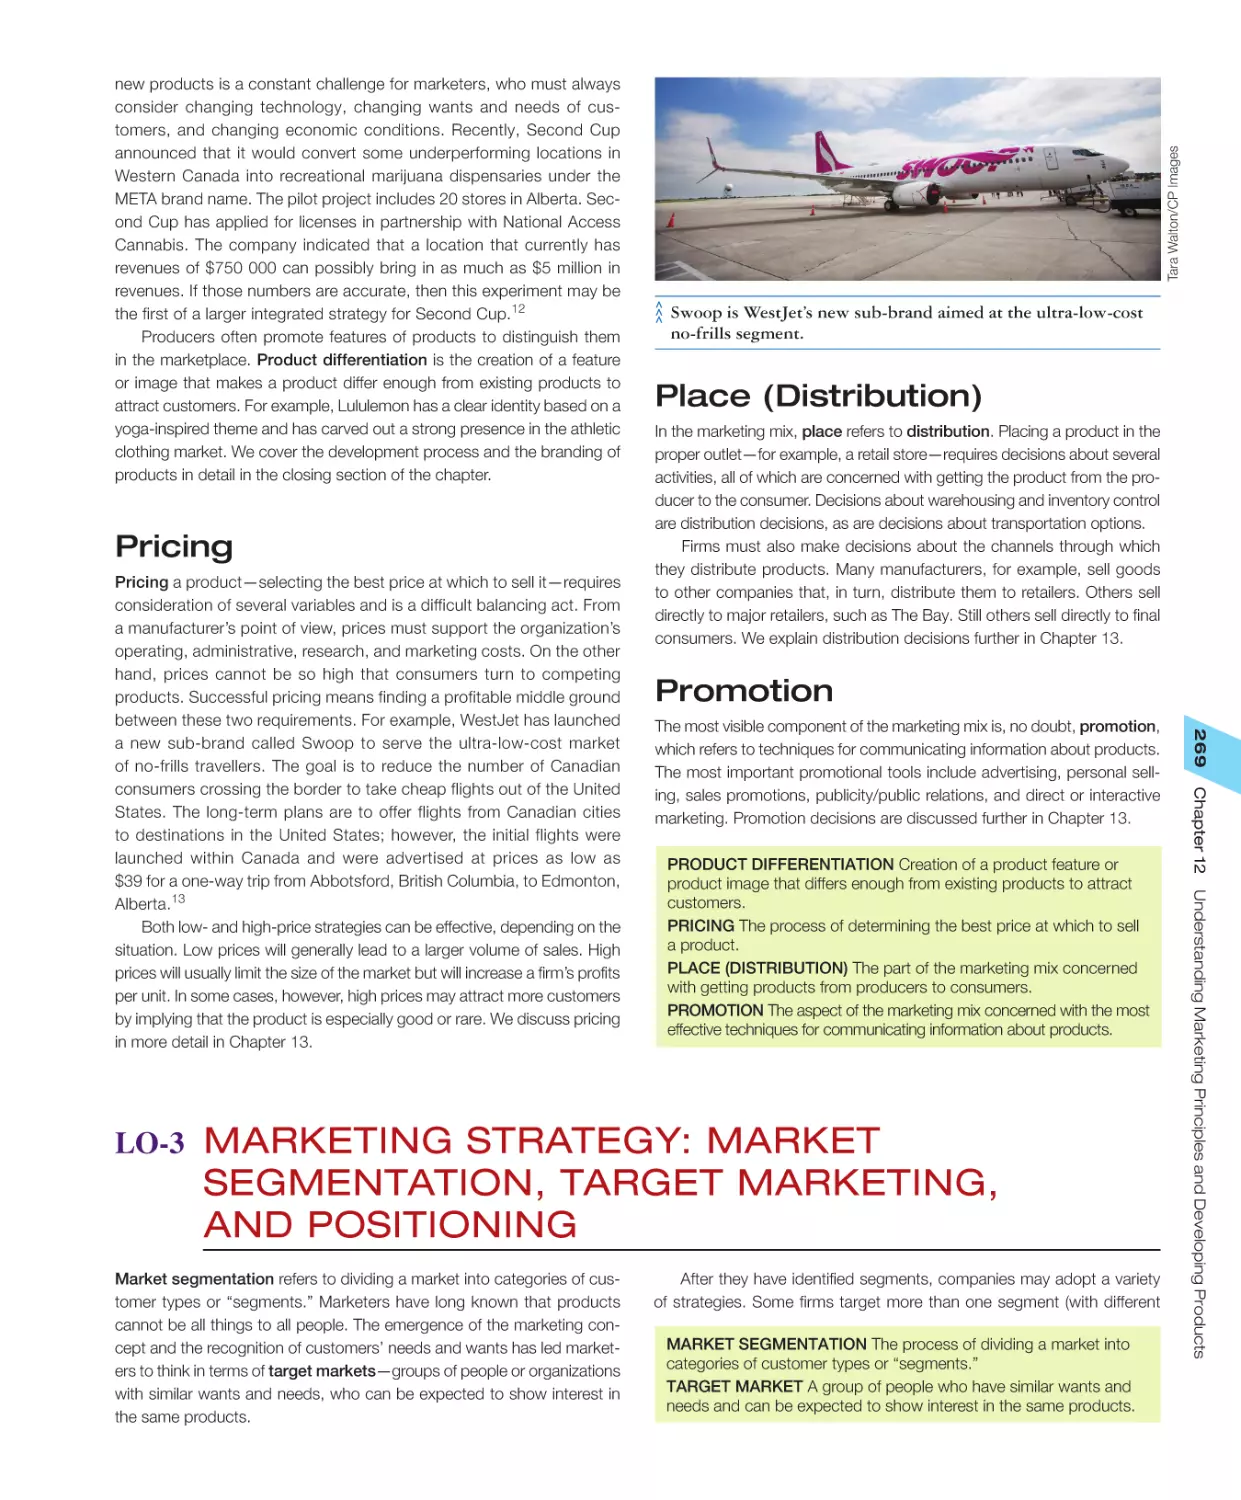 Pricing
Promotion
LO‐3 Marketing Strategy: Market Segmentation, Target Marketing, and Positioning